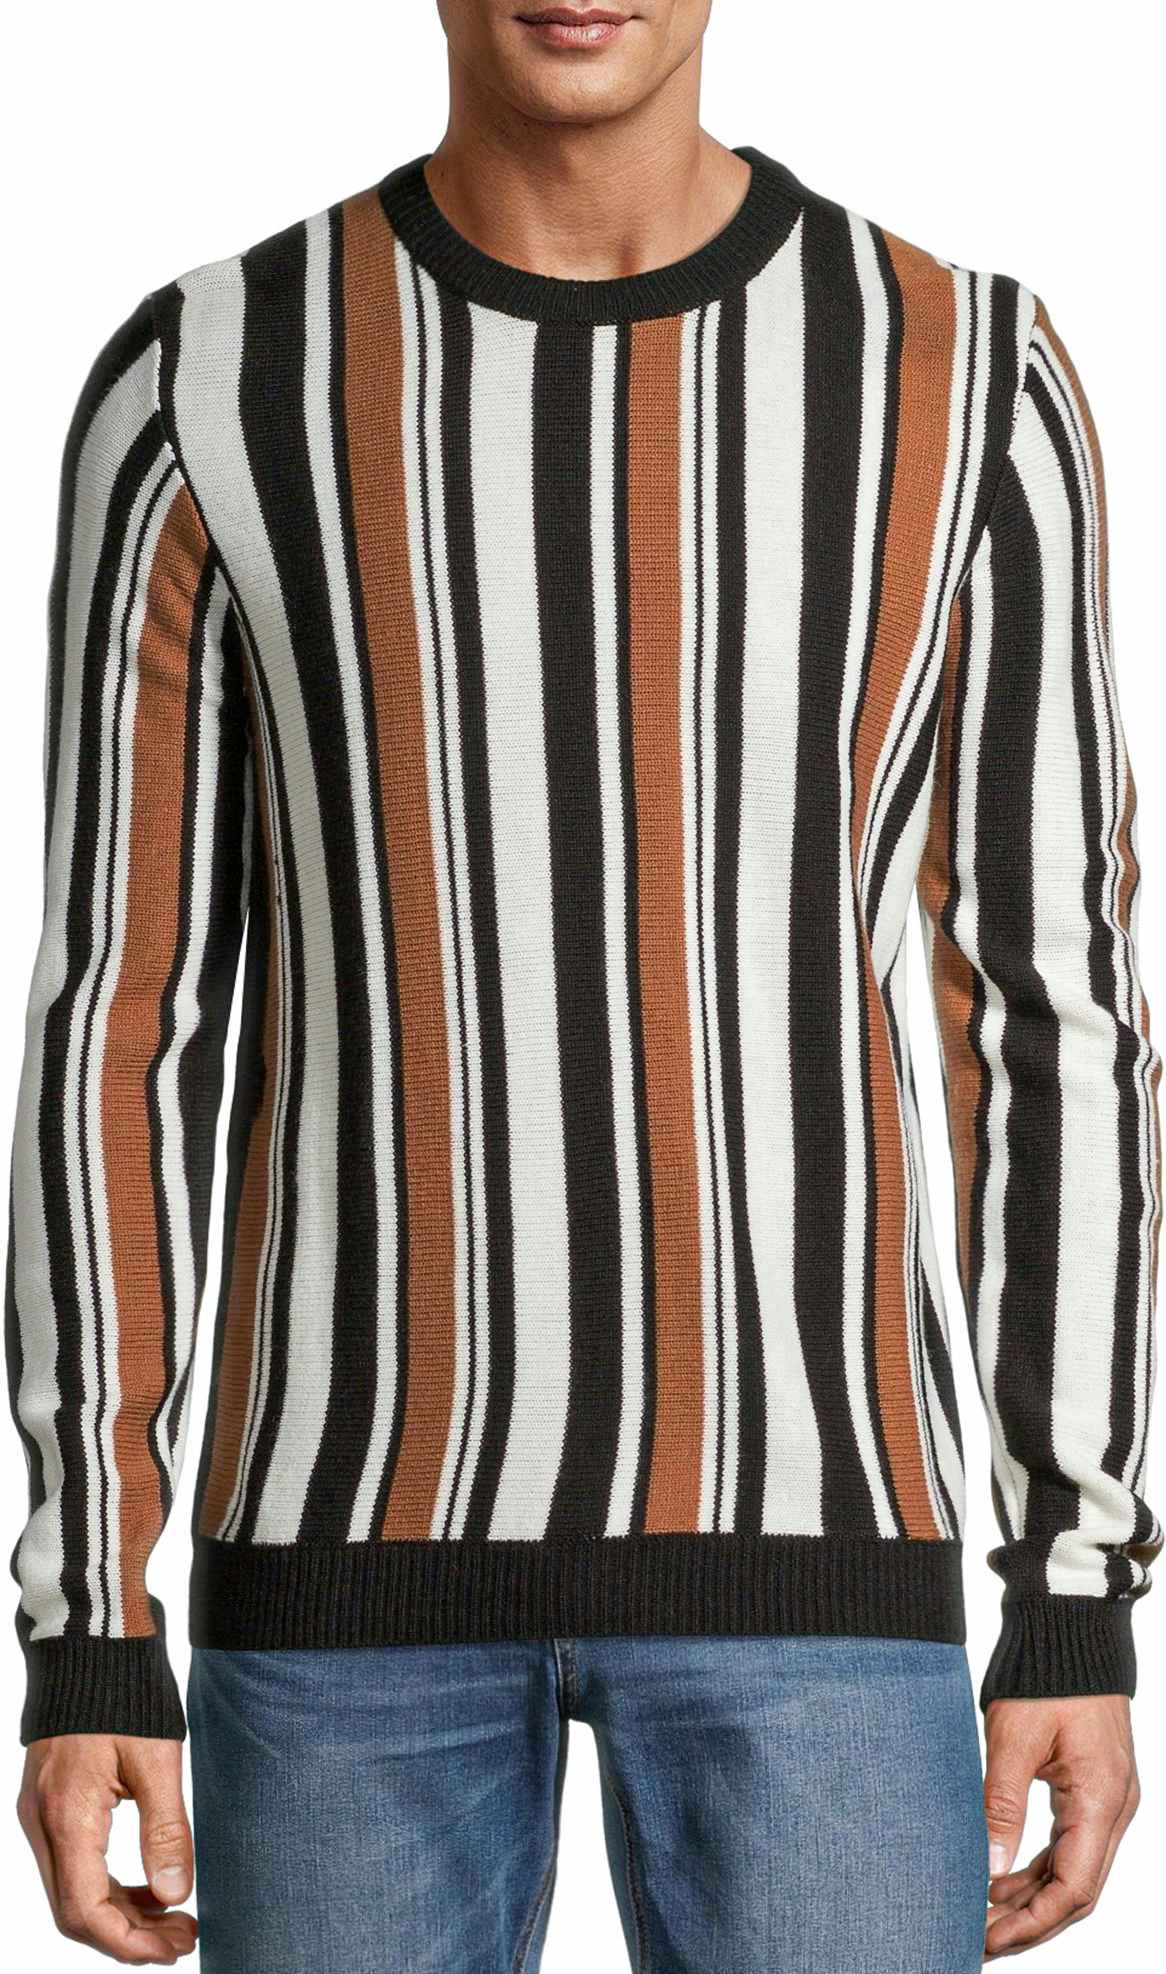 walmart-tribekka-44-striped-sweater-2022